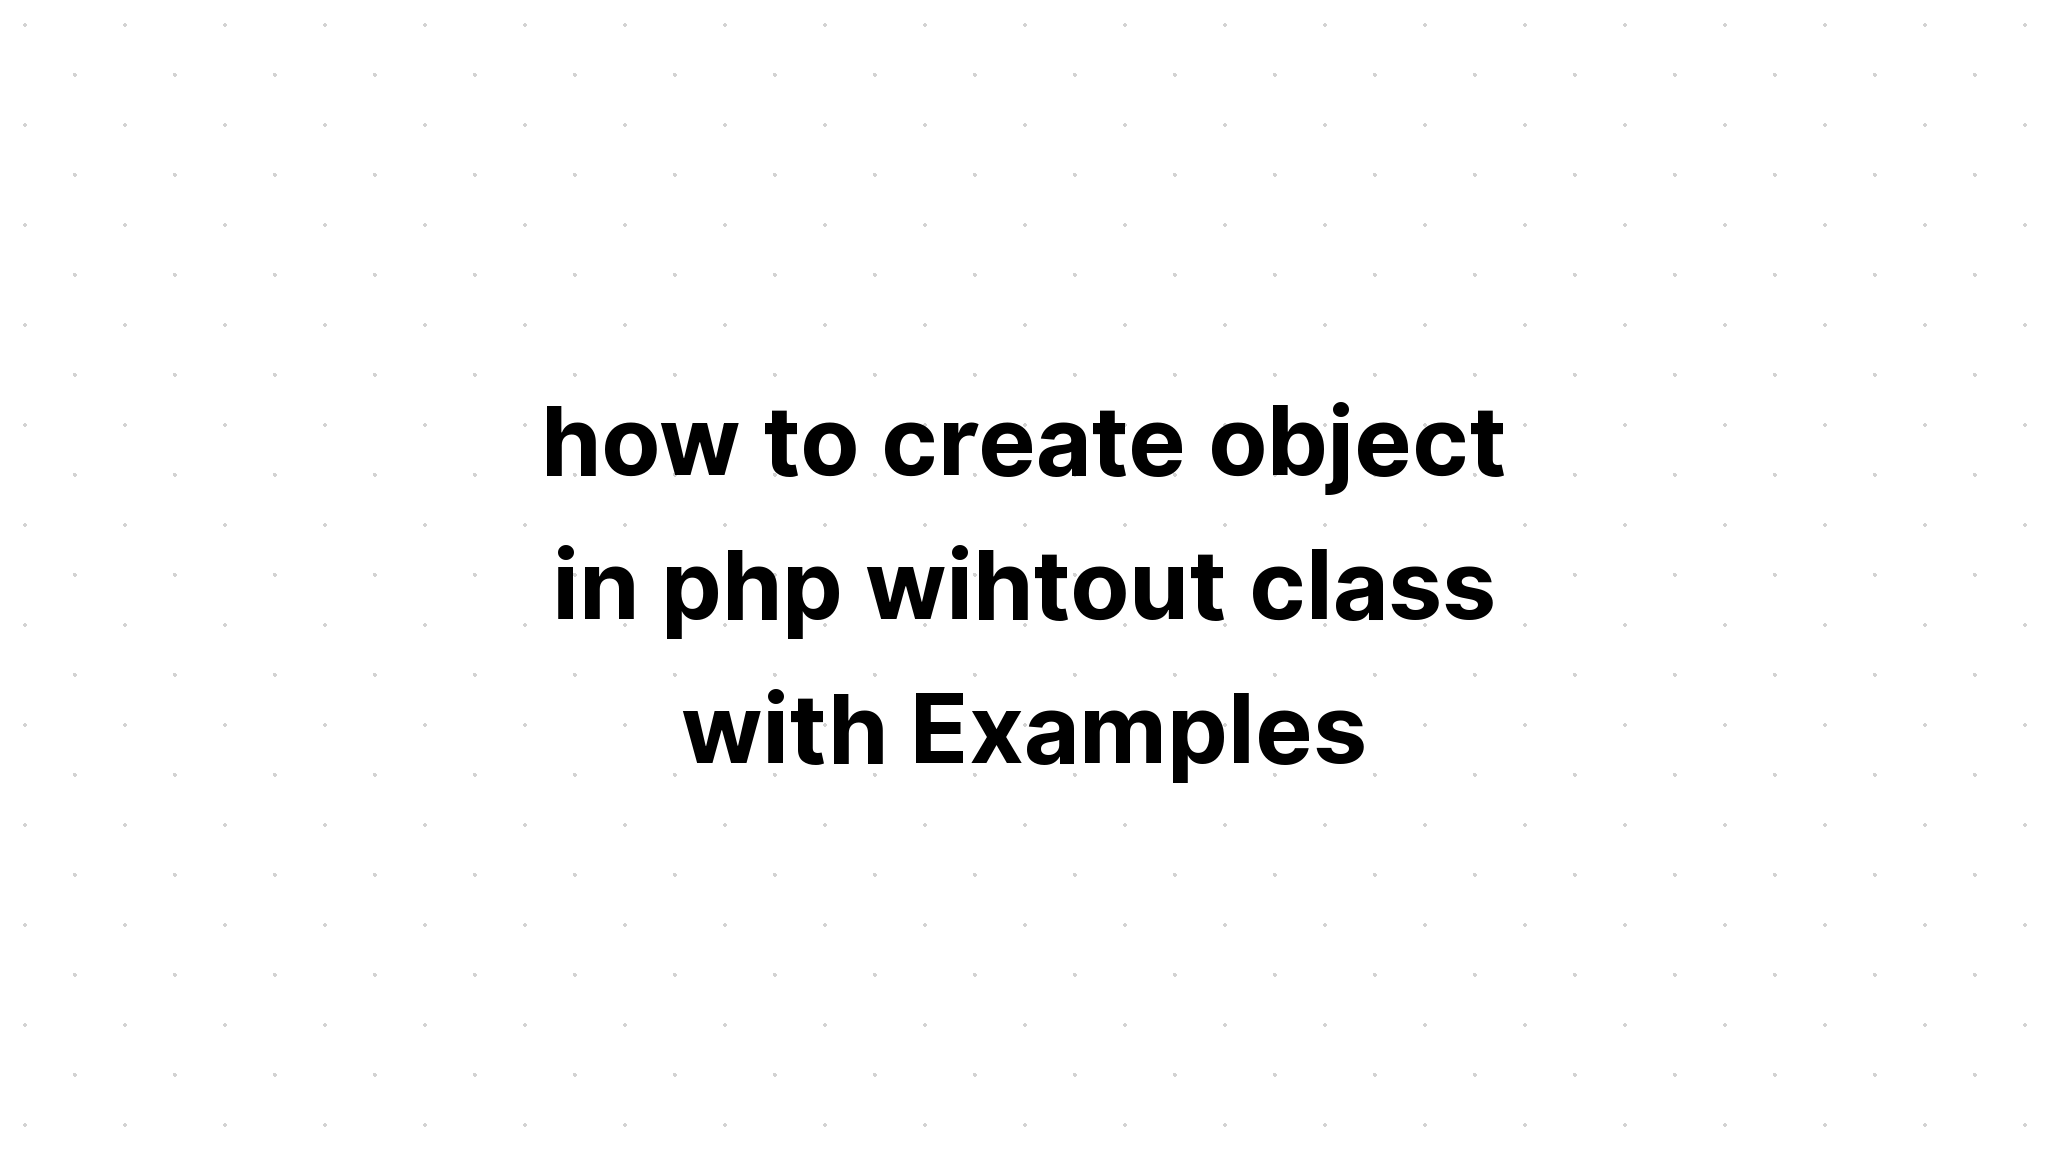 cara membuat objek di php tanpa kelas dengan Contoh